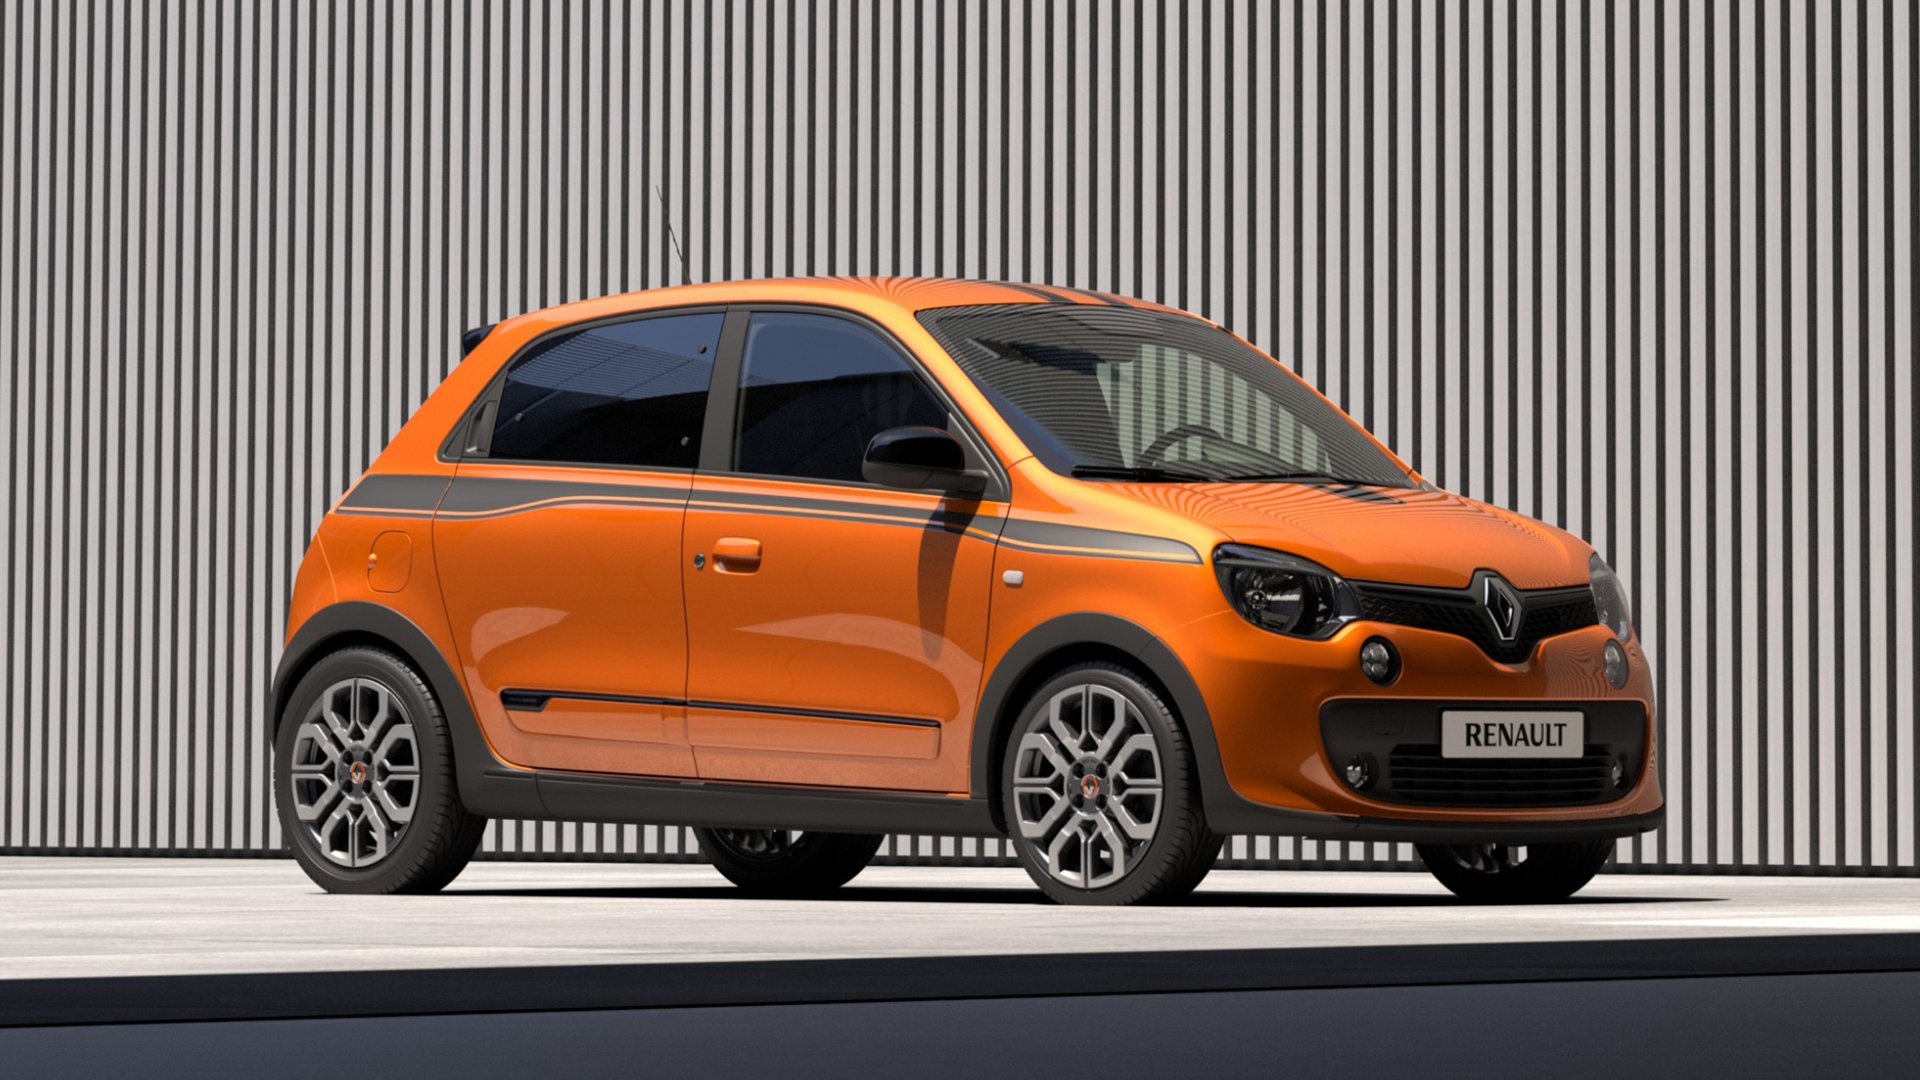 Renault unveils hot hatch version of its Twingo city car | AutoTrader